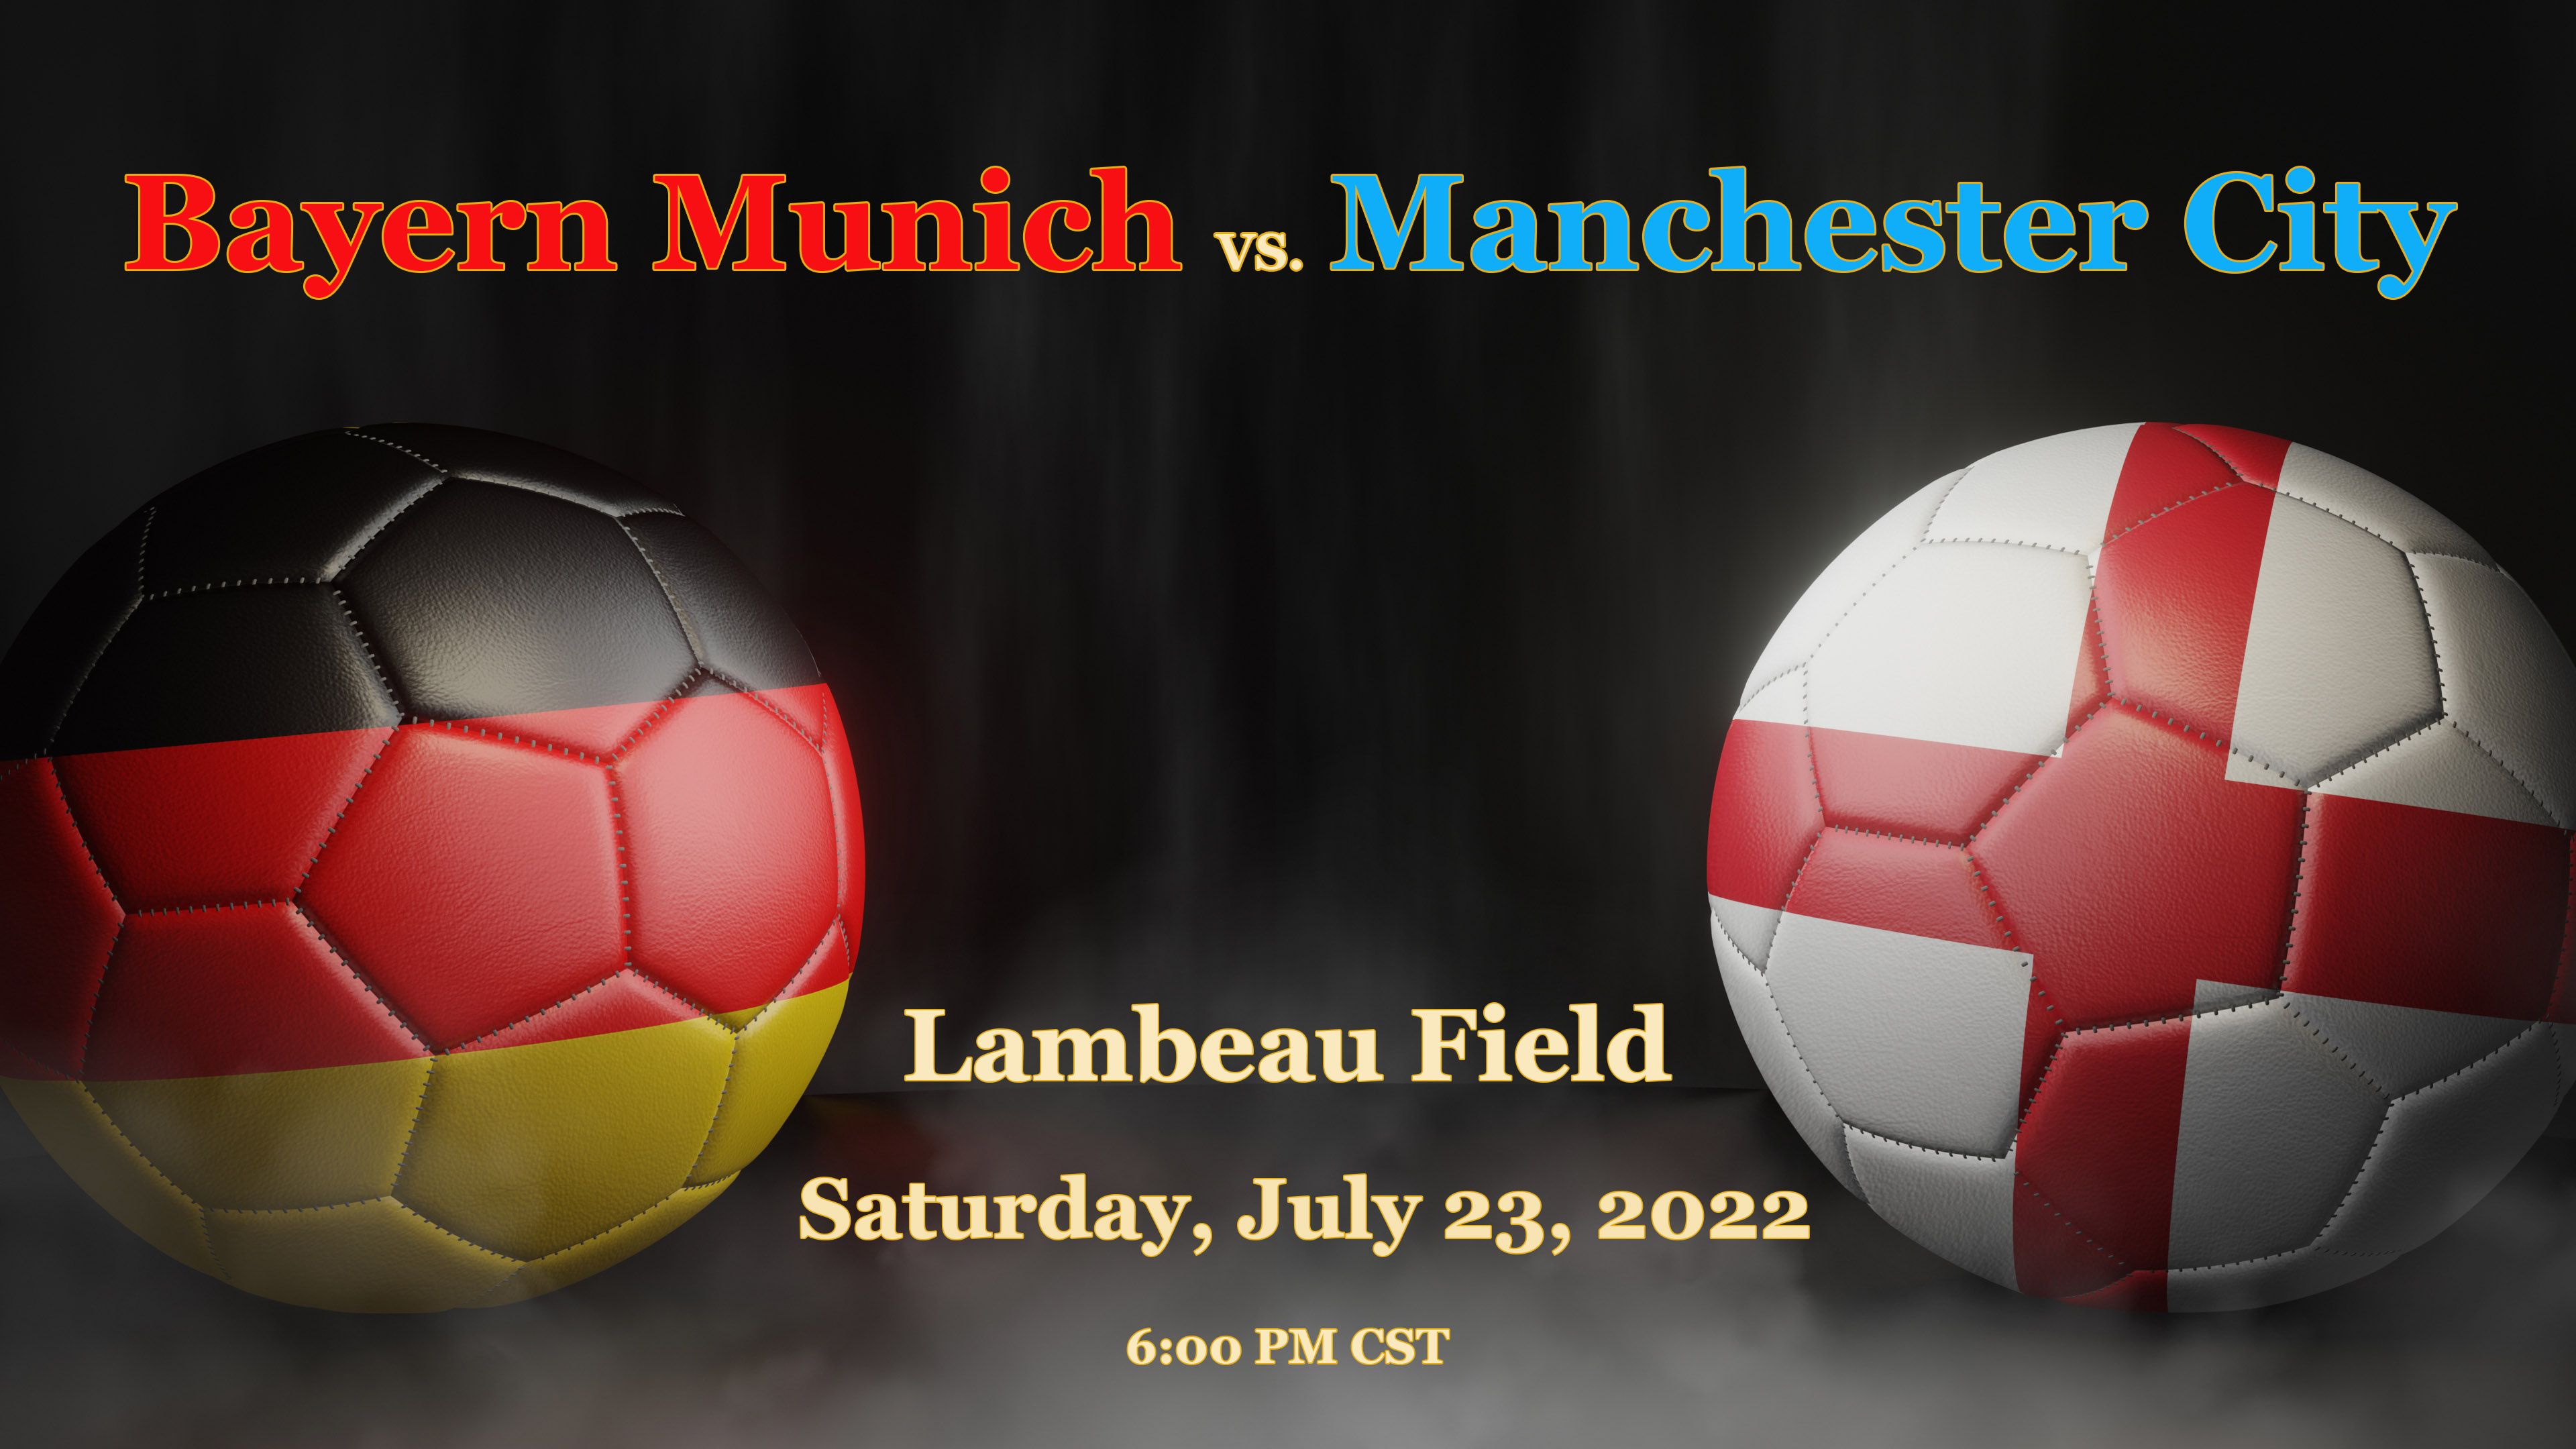 lambeau field soccer game 2022